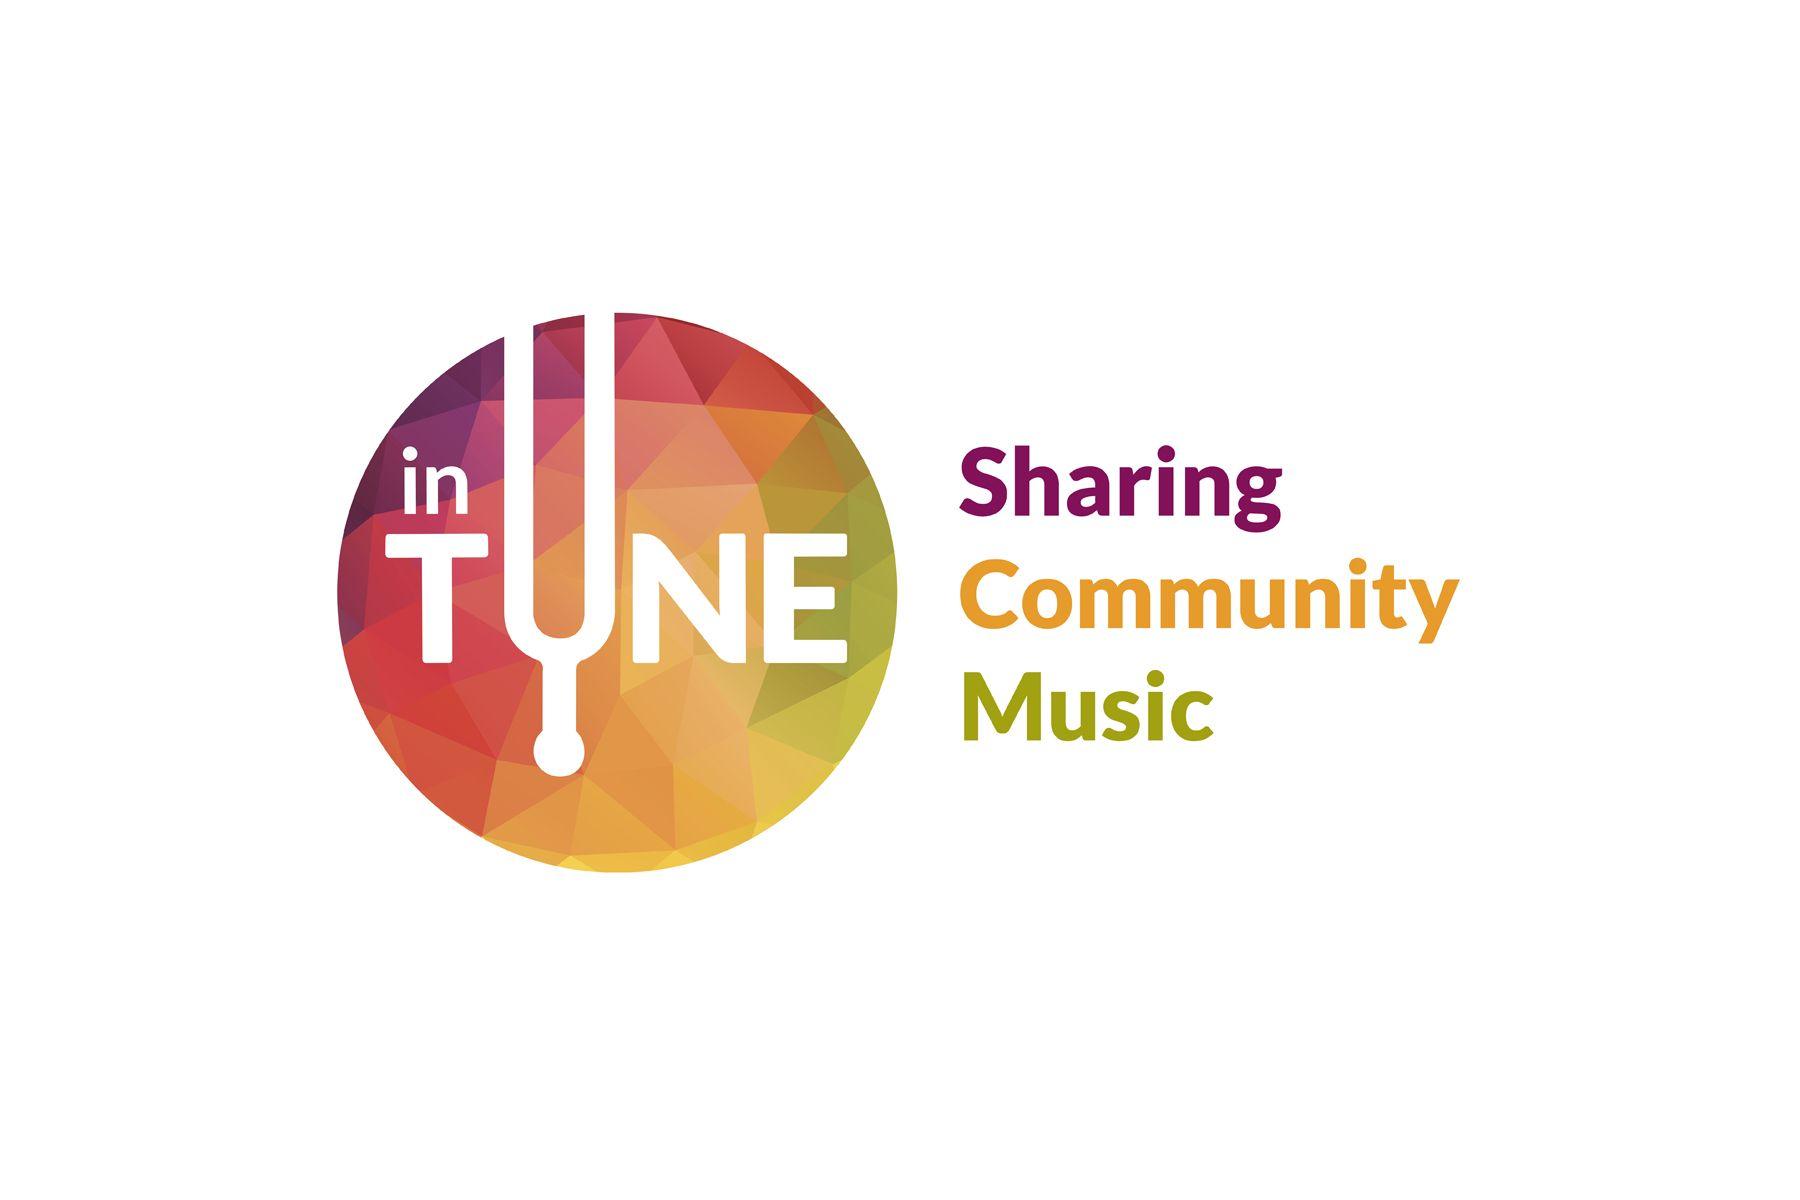 Intune Logo - inTUNE a cross cultural community music project. Logo